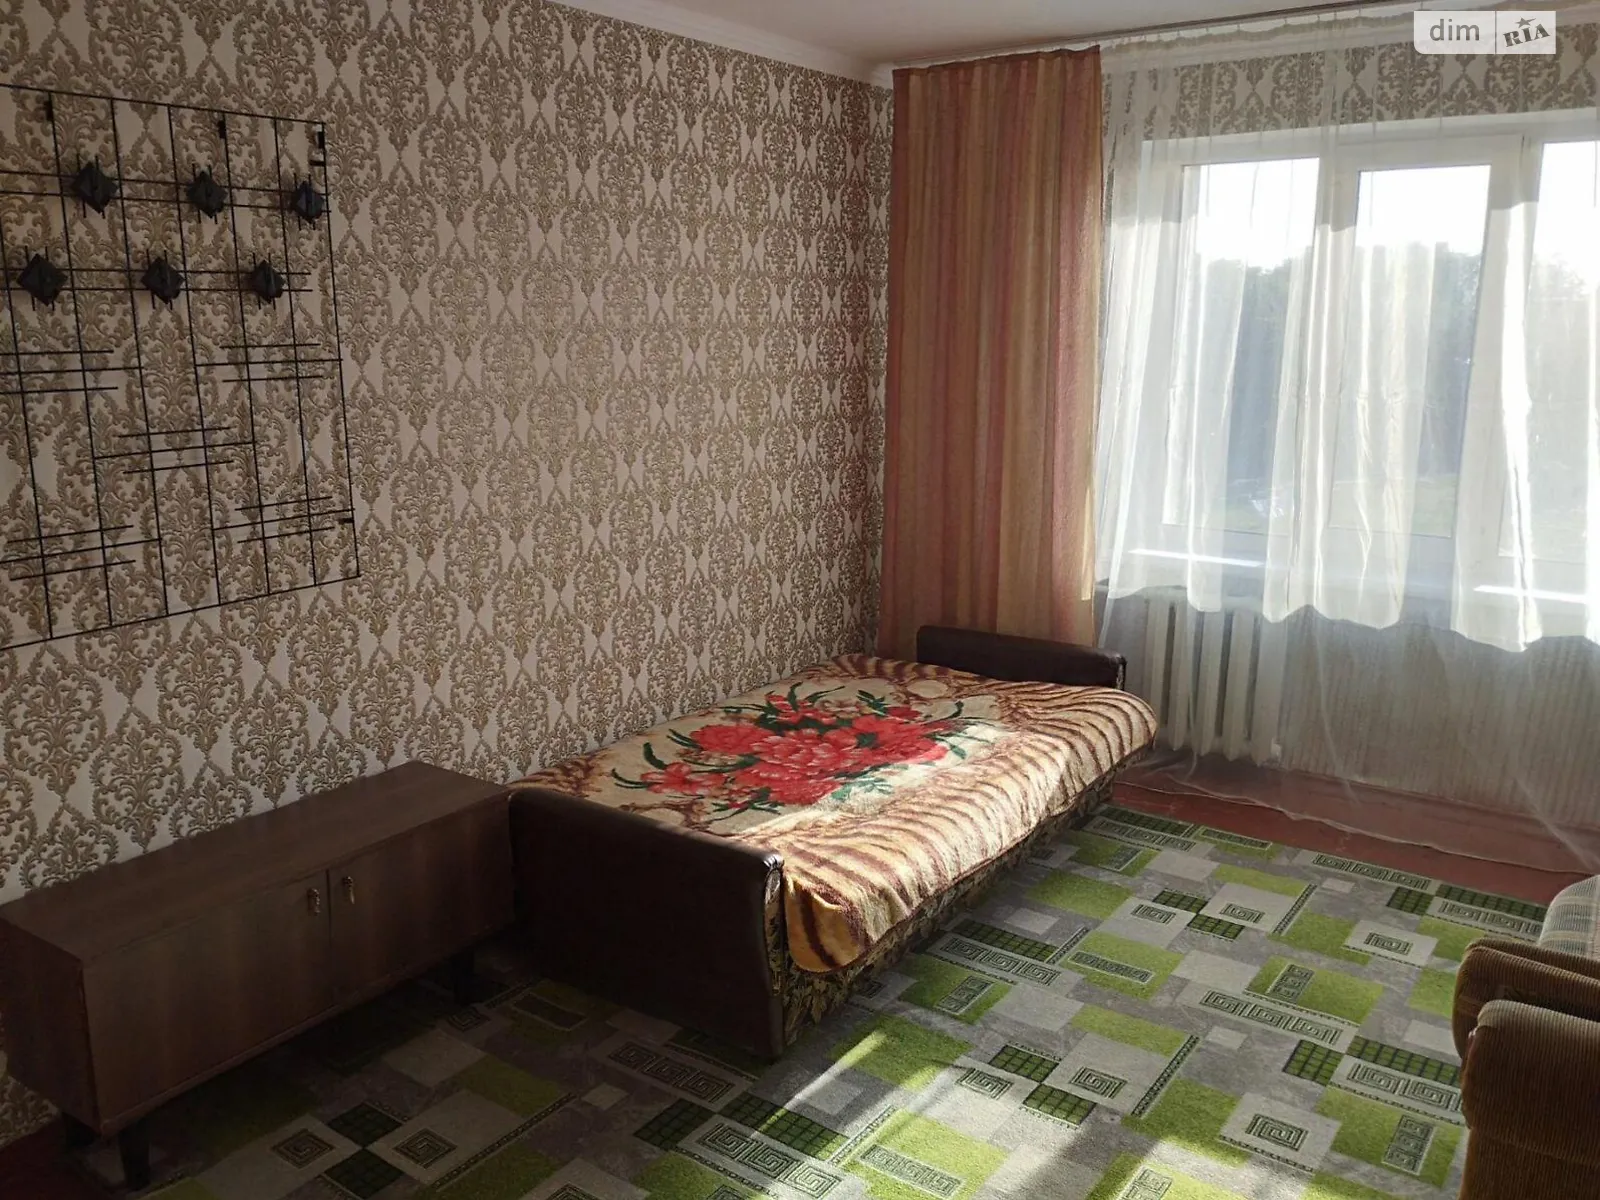 Продается комната 21 кв. м в Харькове - фото 3